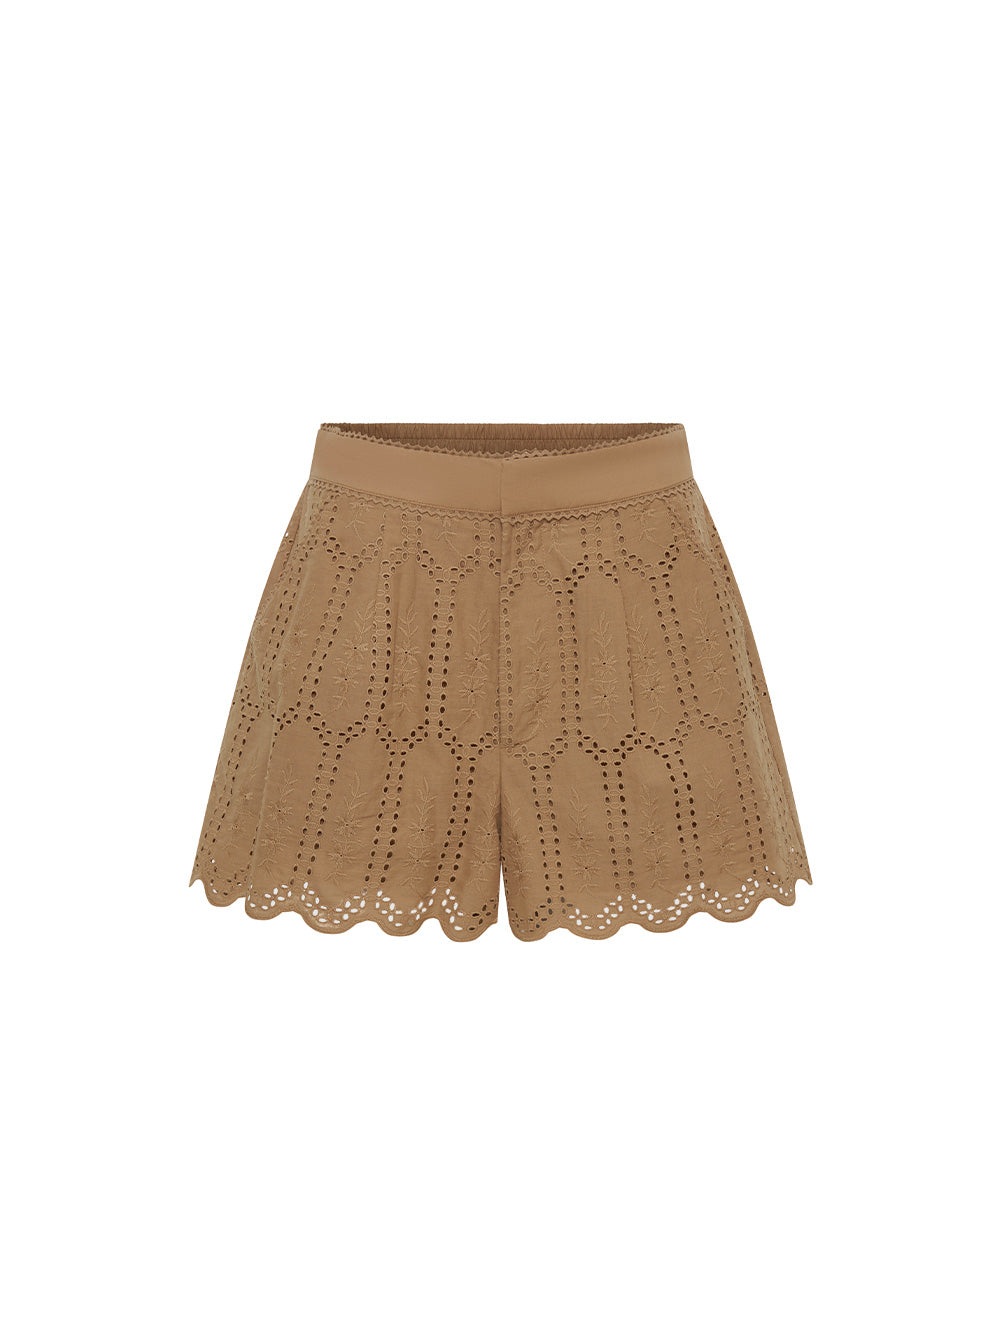 Estelle Short Mocha KIVARI | Brown shorts with lace detail 